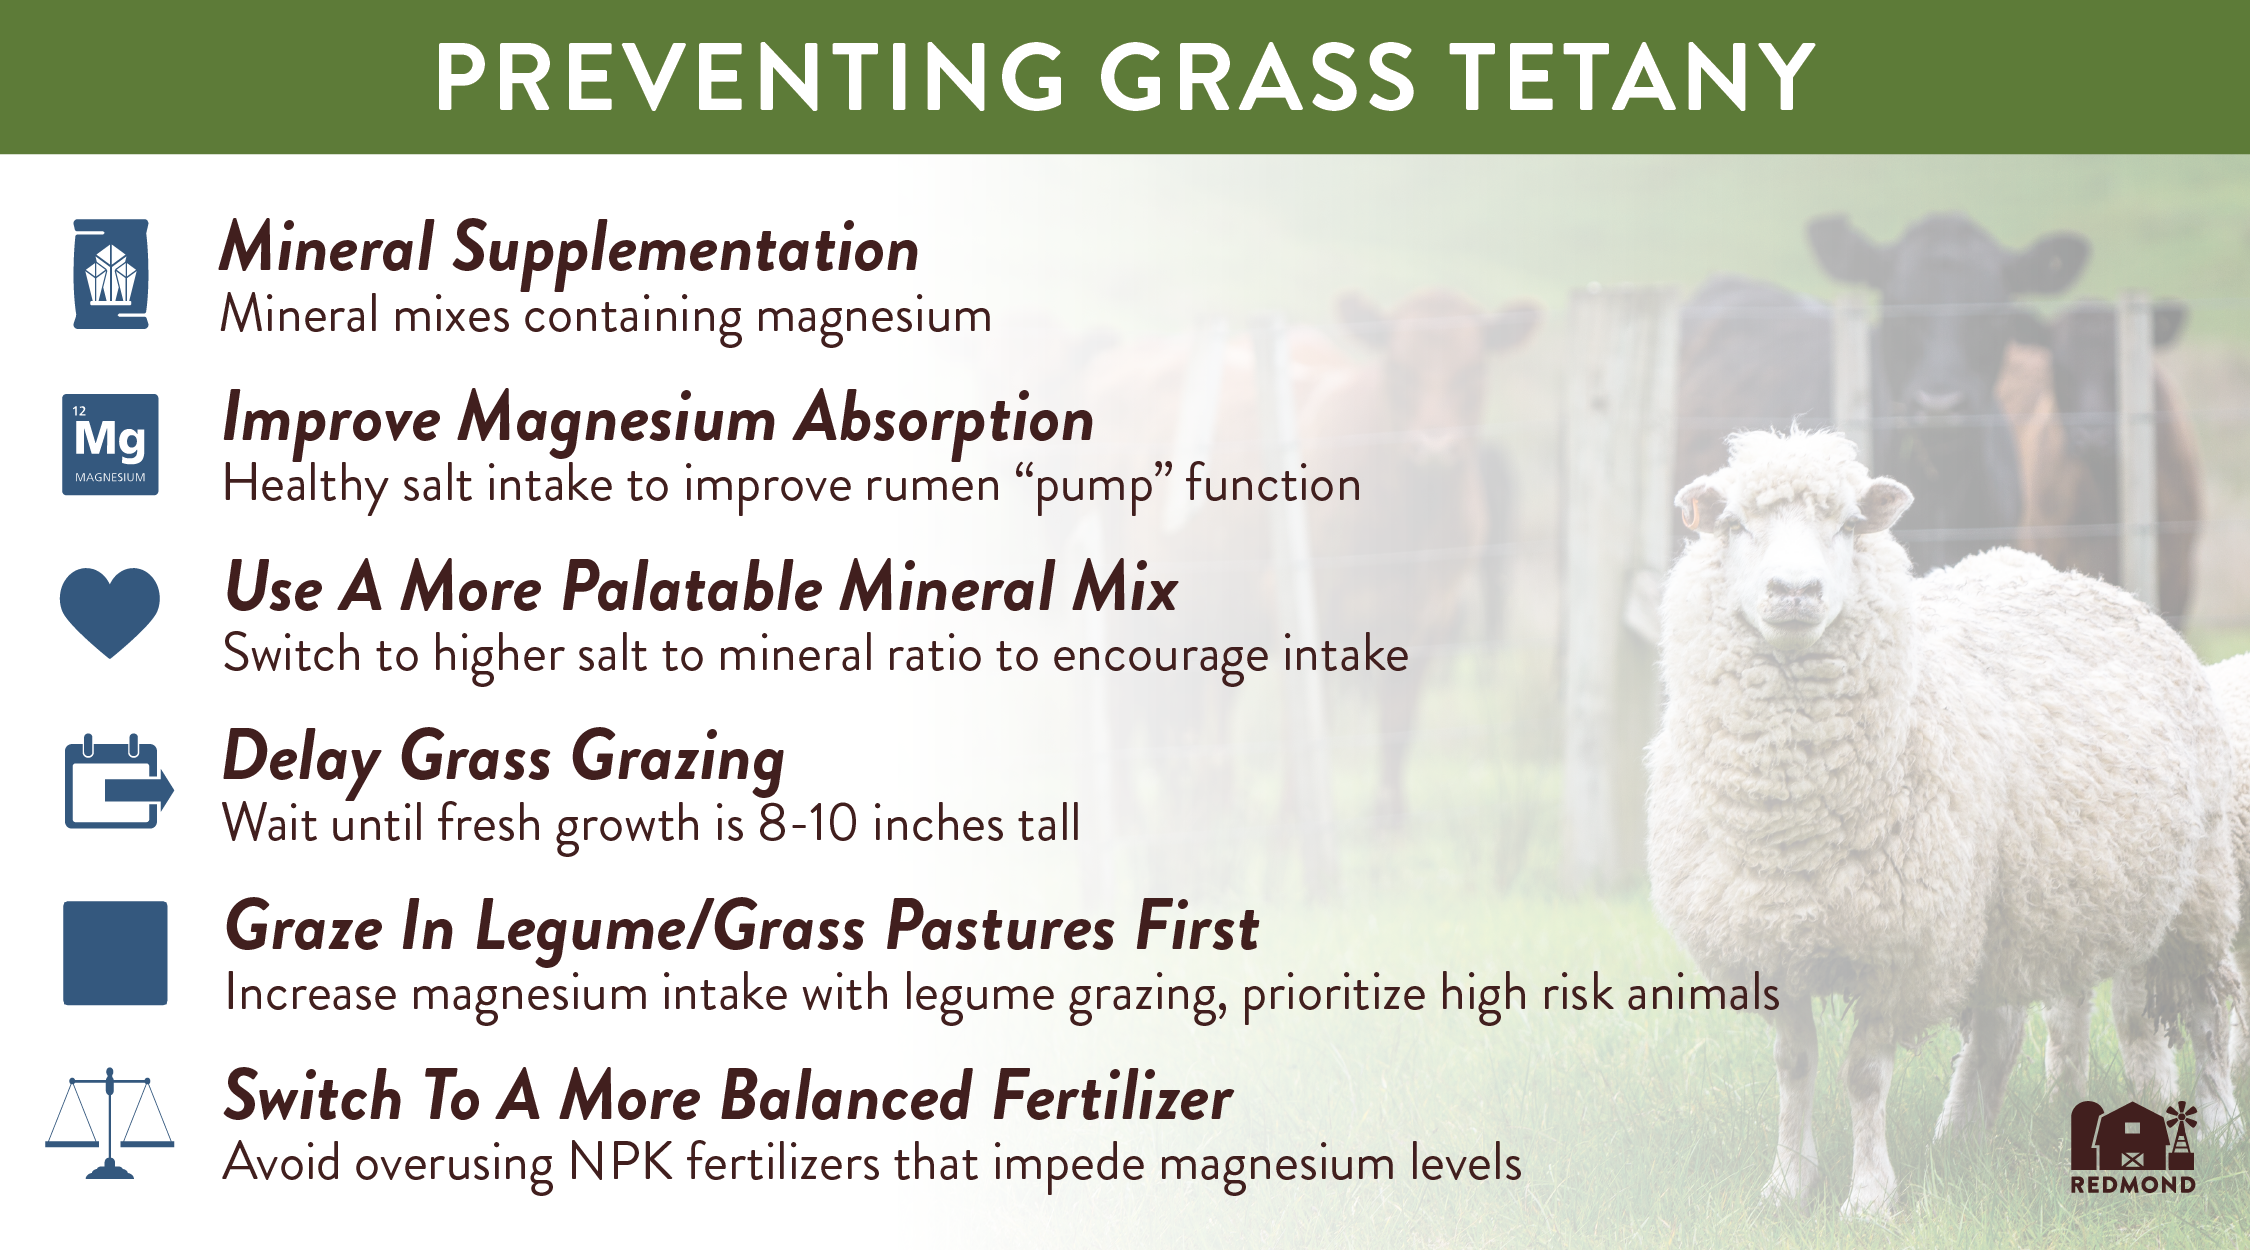 How to prevent grass tetany